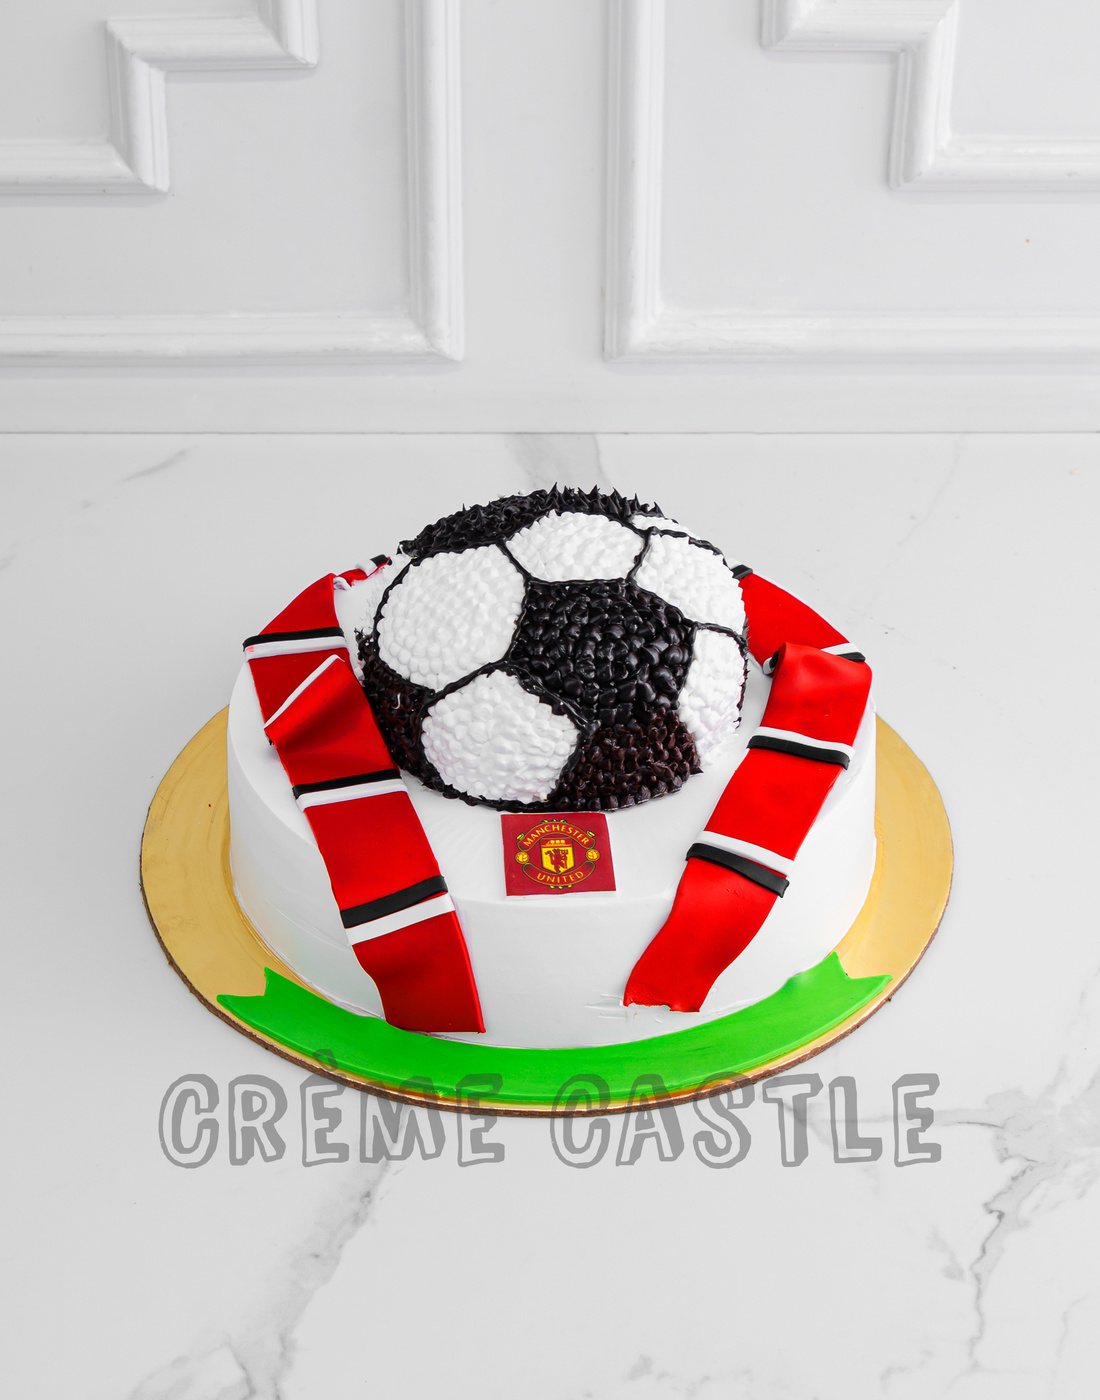 Ronaldo Man Utd Character Cake – The Cake People